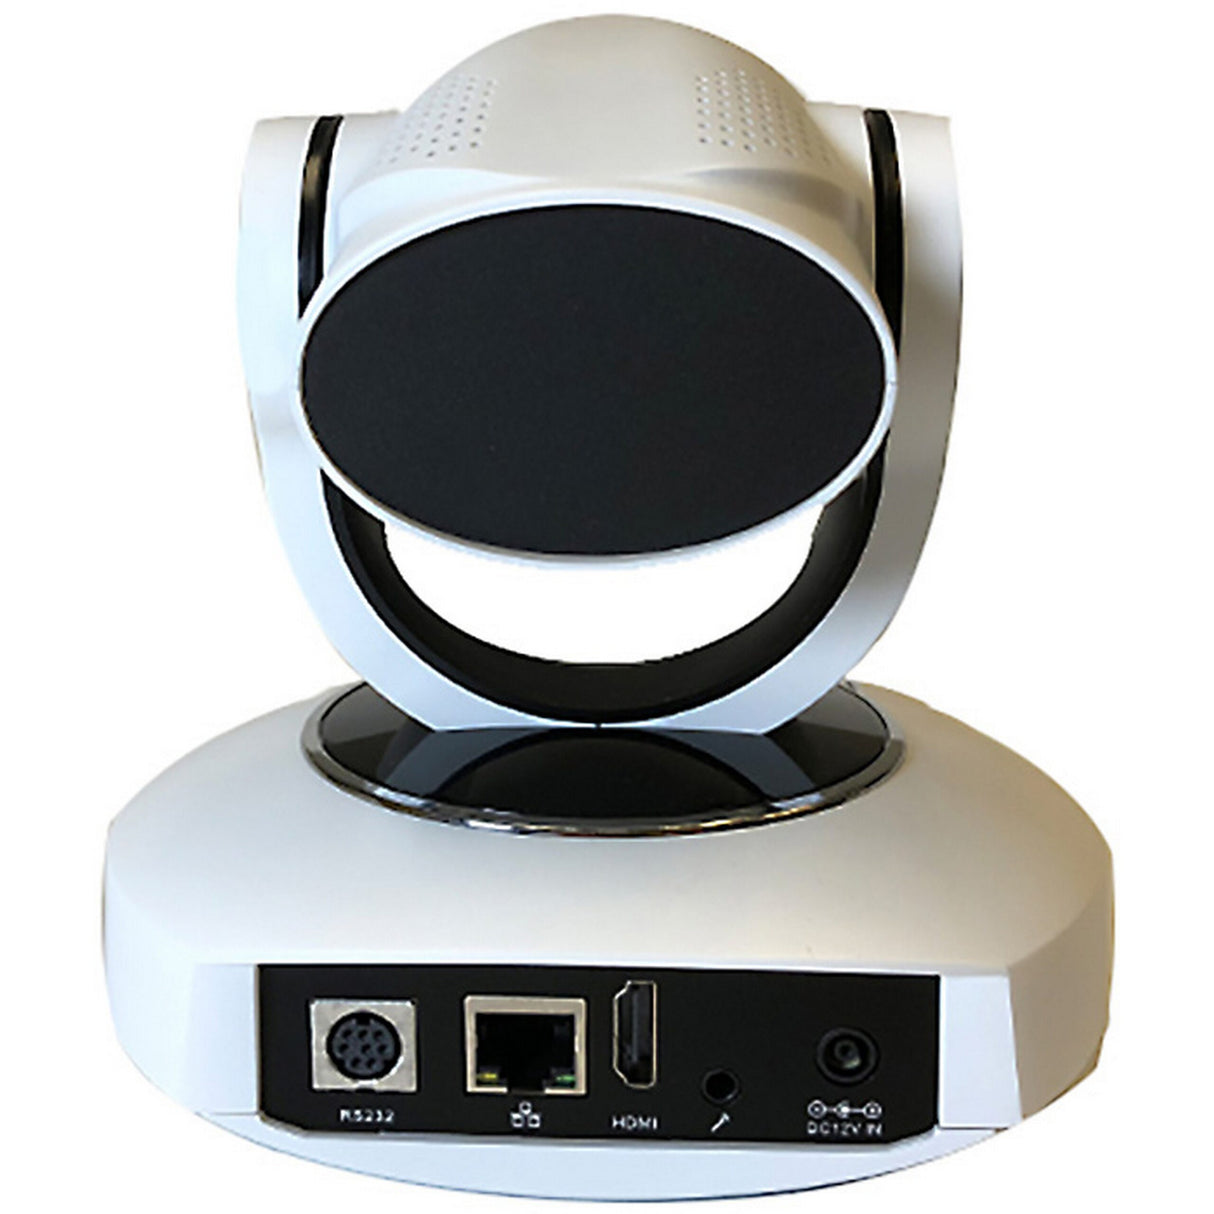 AViPAS AV-1081 10x Optical Zoom HDMI PTZ Camera with IP Live Streaming, White